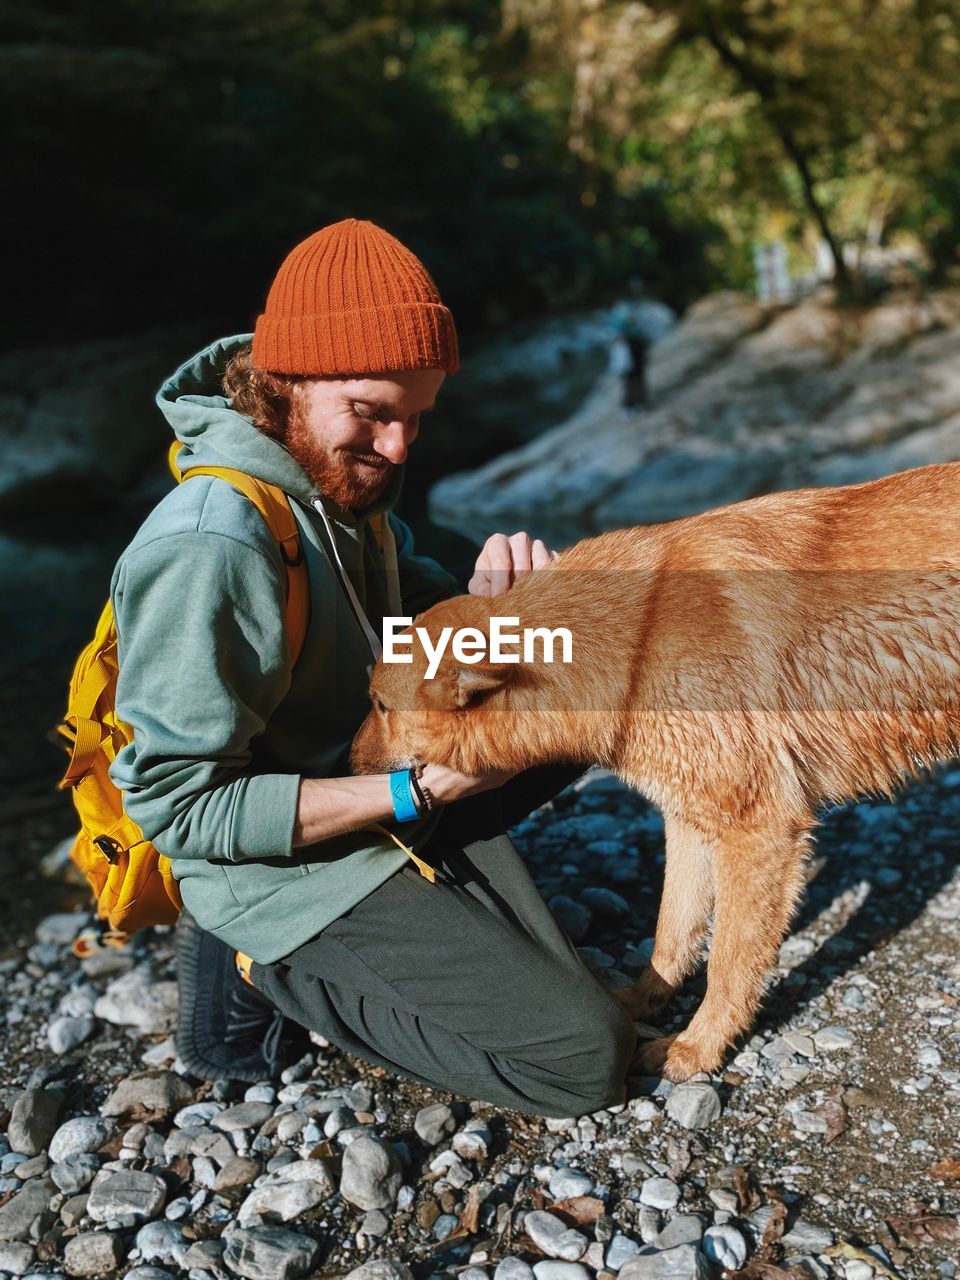 Man petting dog outdoors